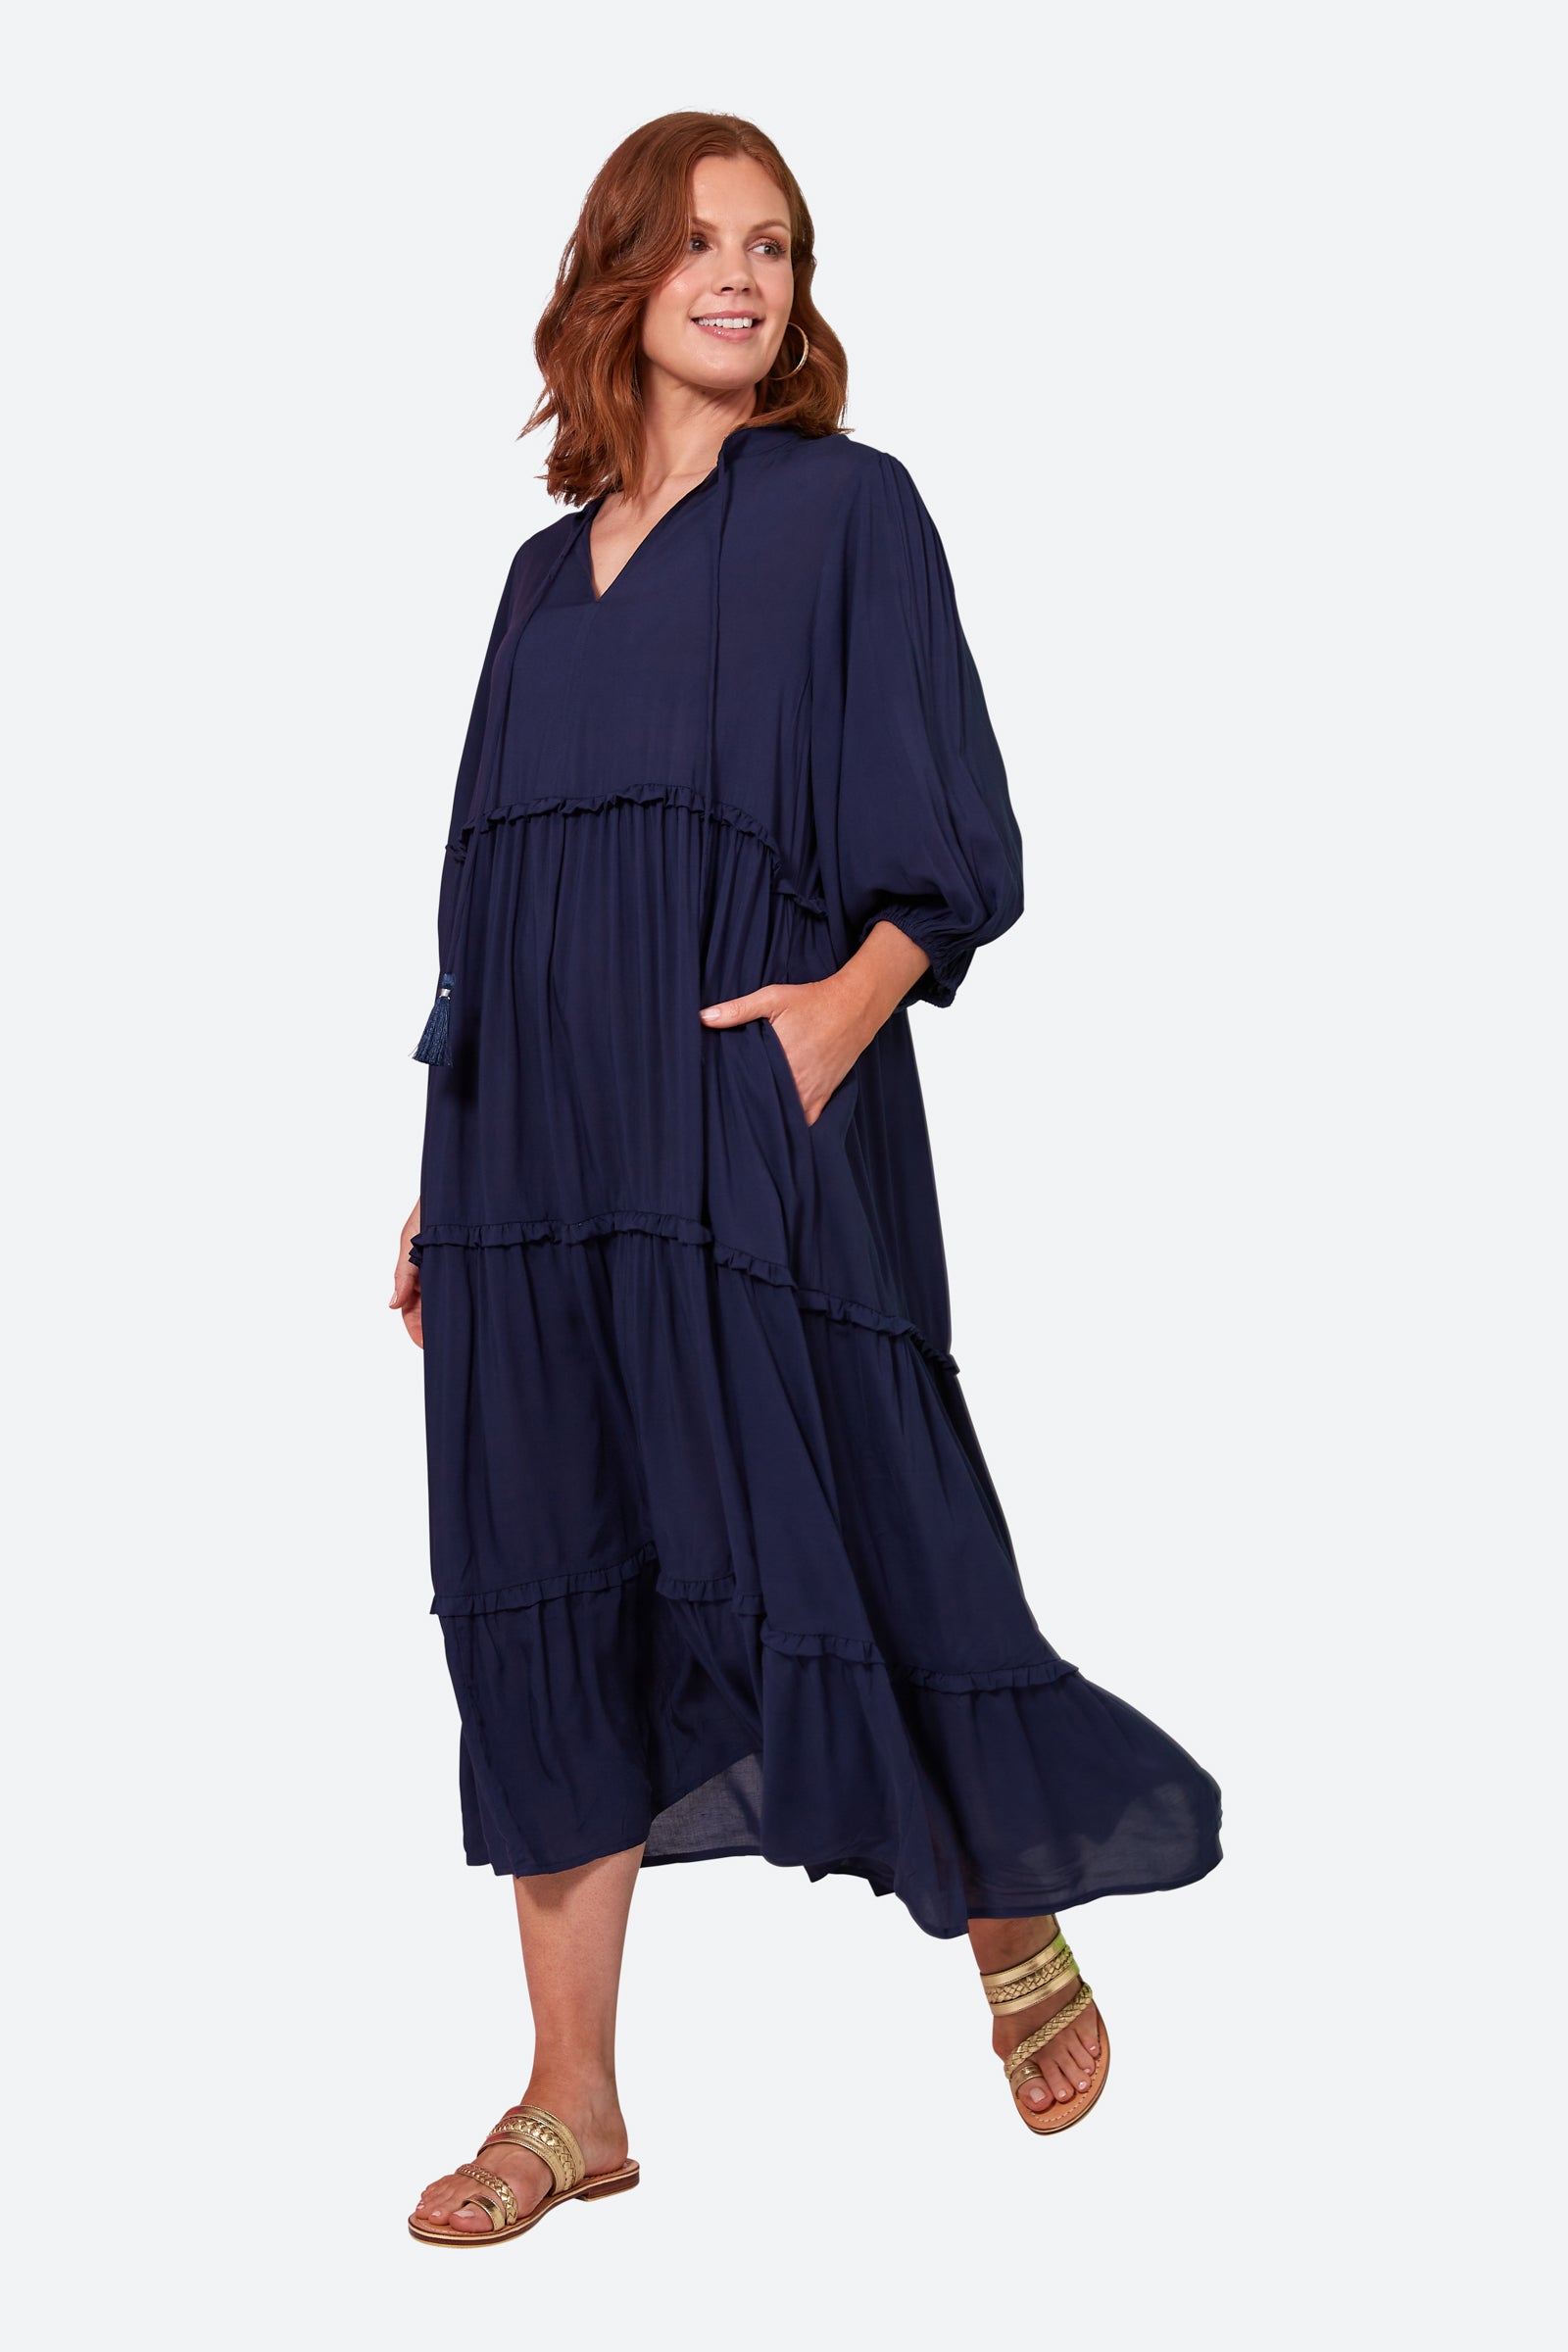 Esprit Tiered Dress - Sapphire - eb&ive Clothing - Dress 3/4 Length Linen